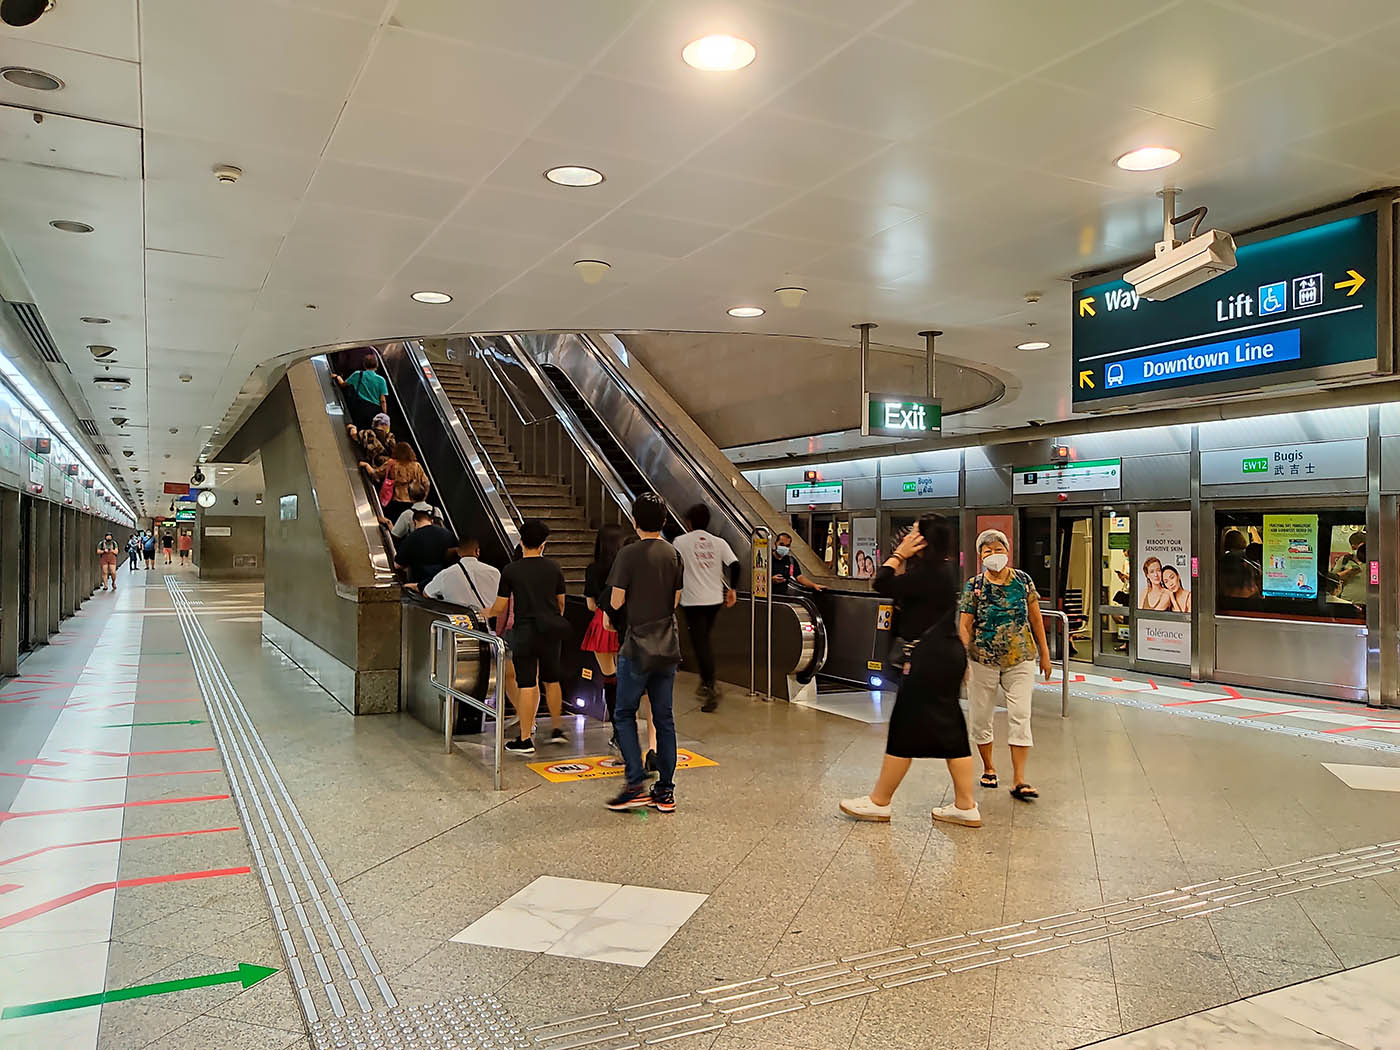 Bugis MRT Station - - EW12 Platforms